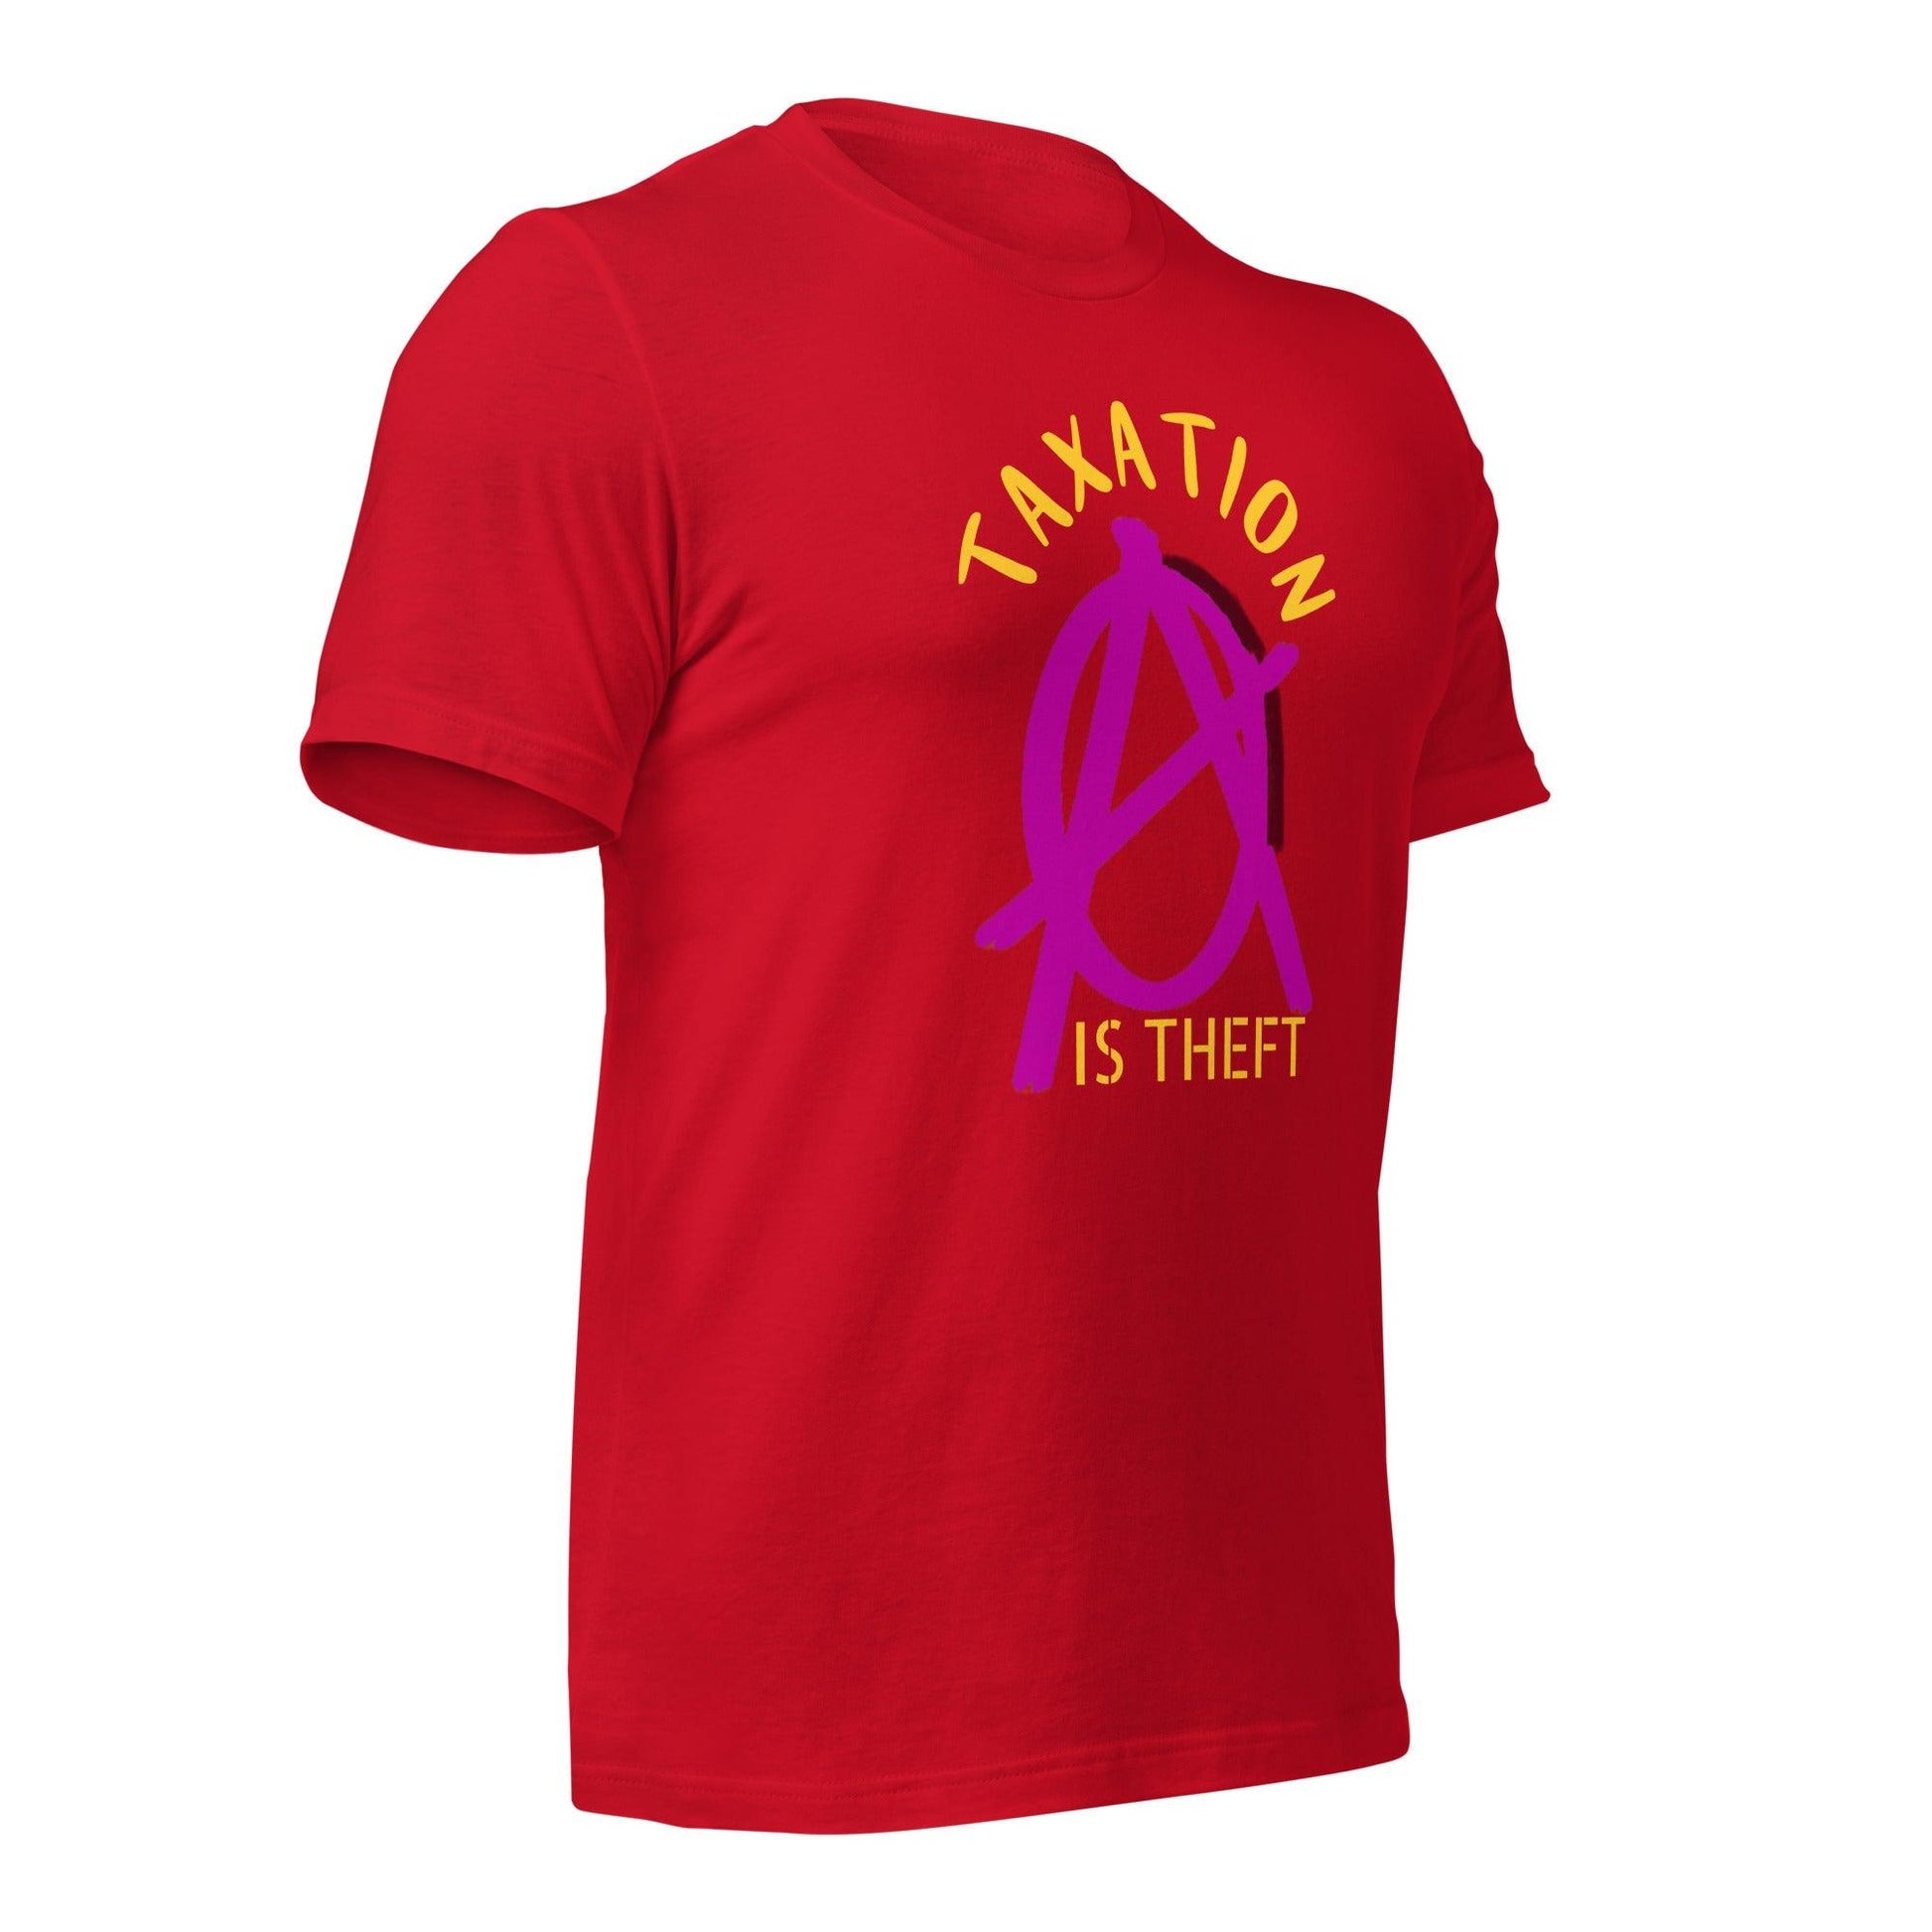 Anarchy Wear Pink "Taxation Is Theft" Unisex t-shirt - AnarchyWear